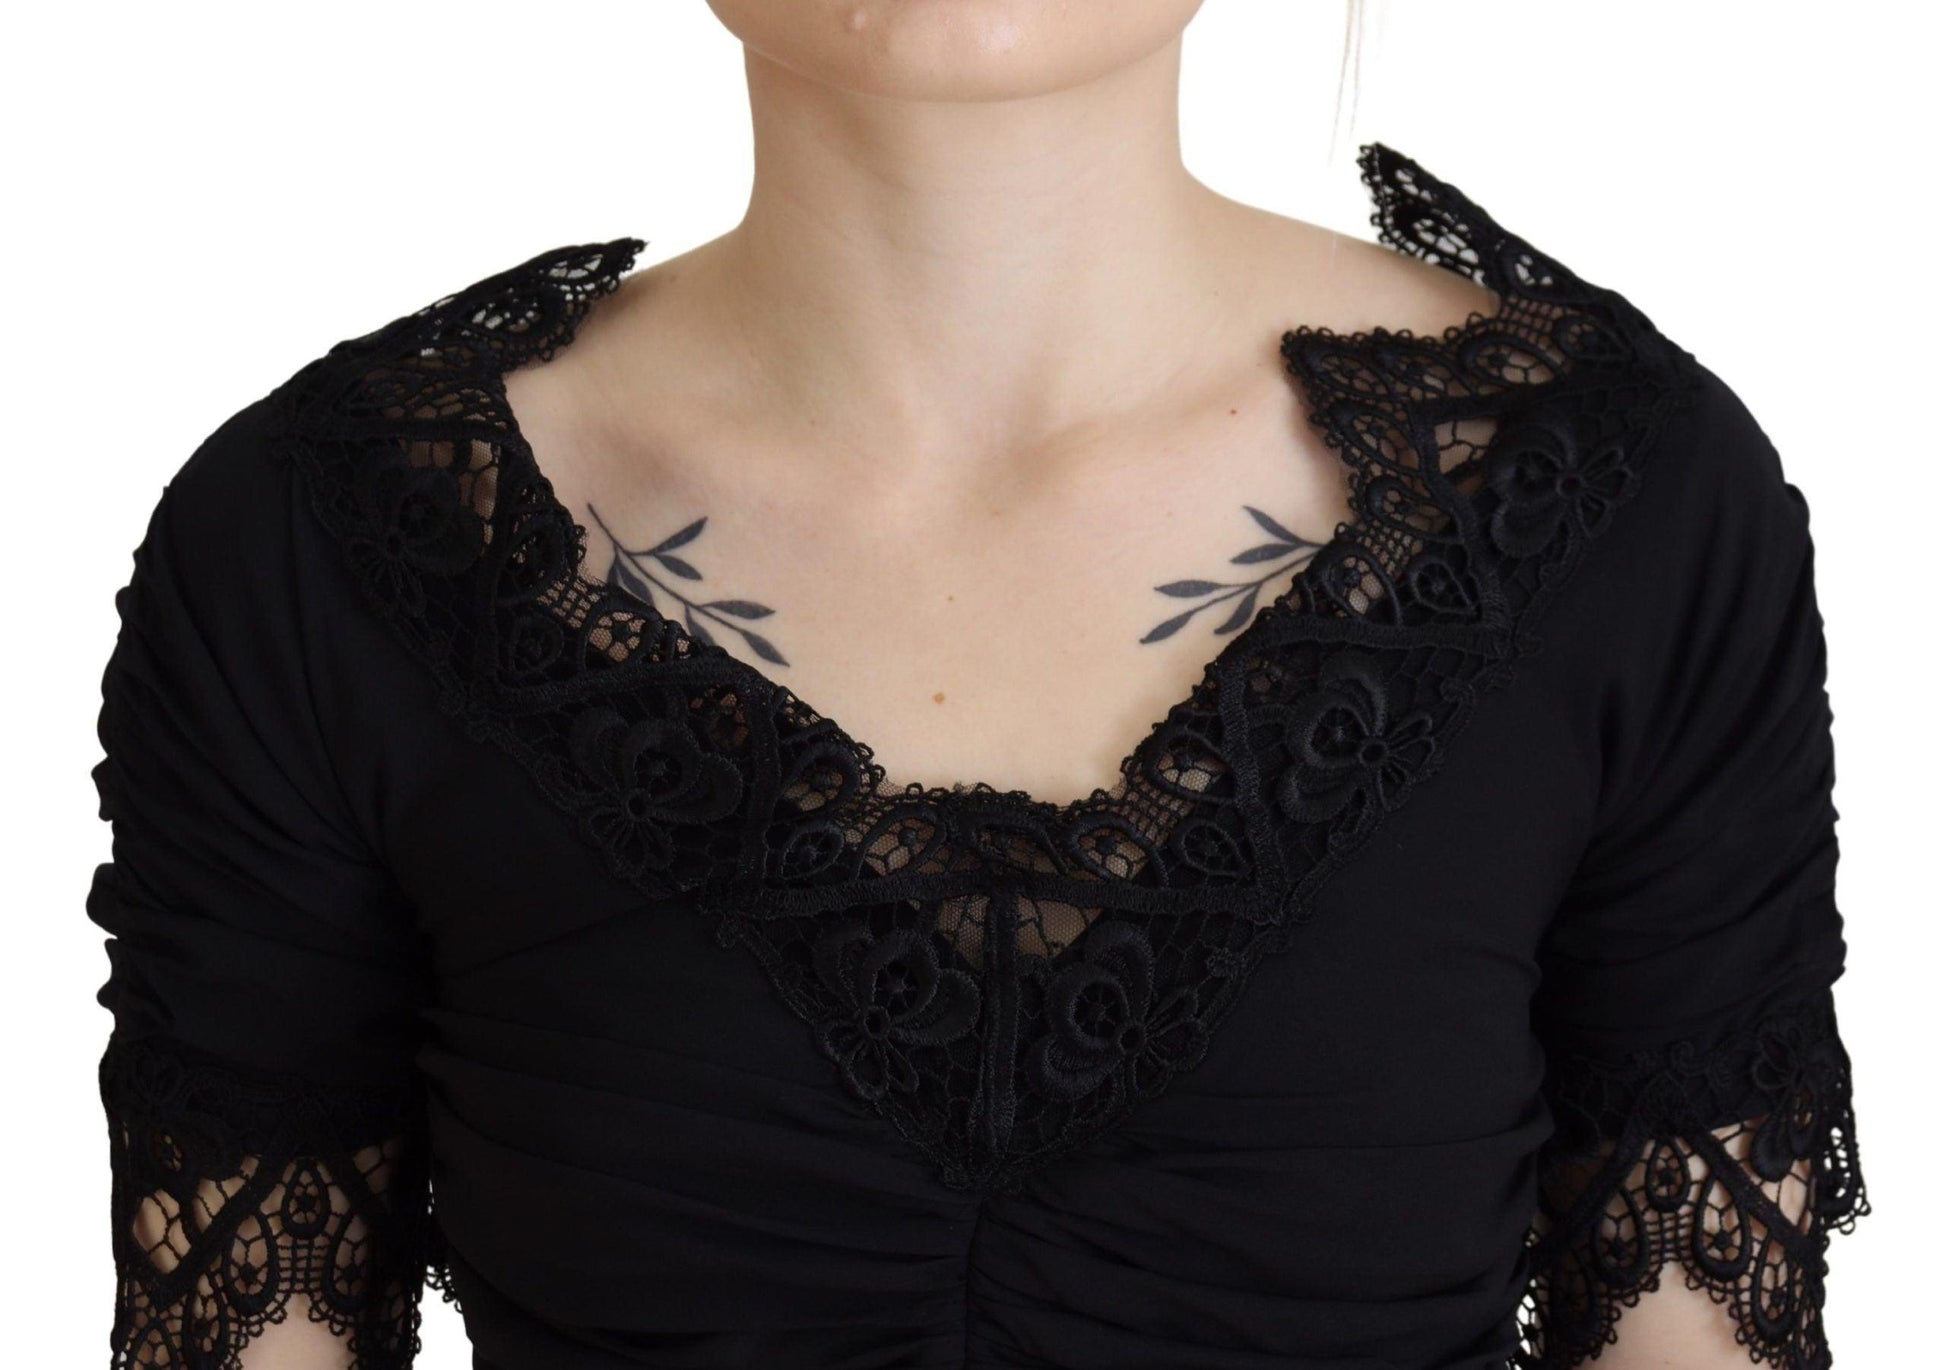 Dolce & Gabbana Elegant Sheath Short Sleeve Midi Dress - PER.FASHION